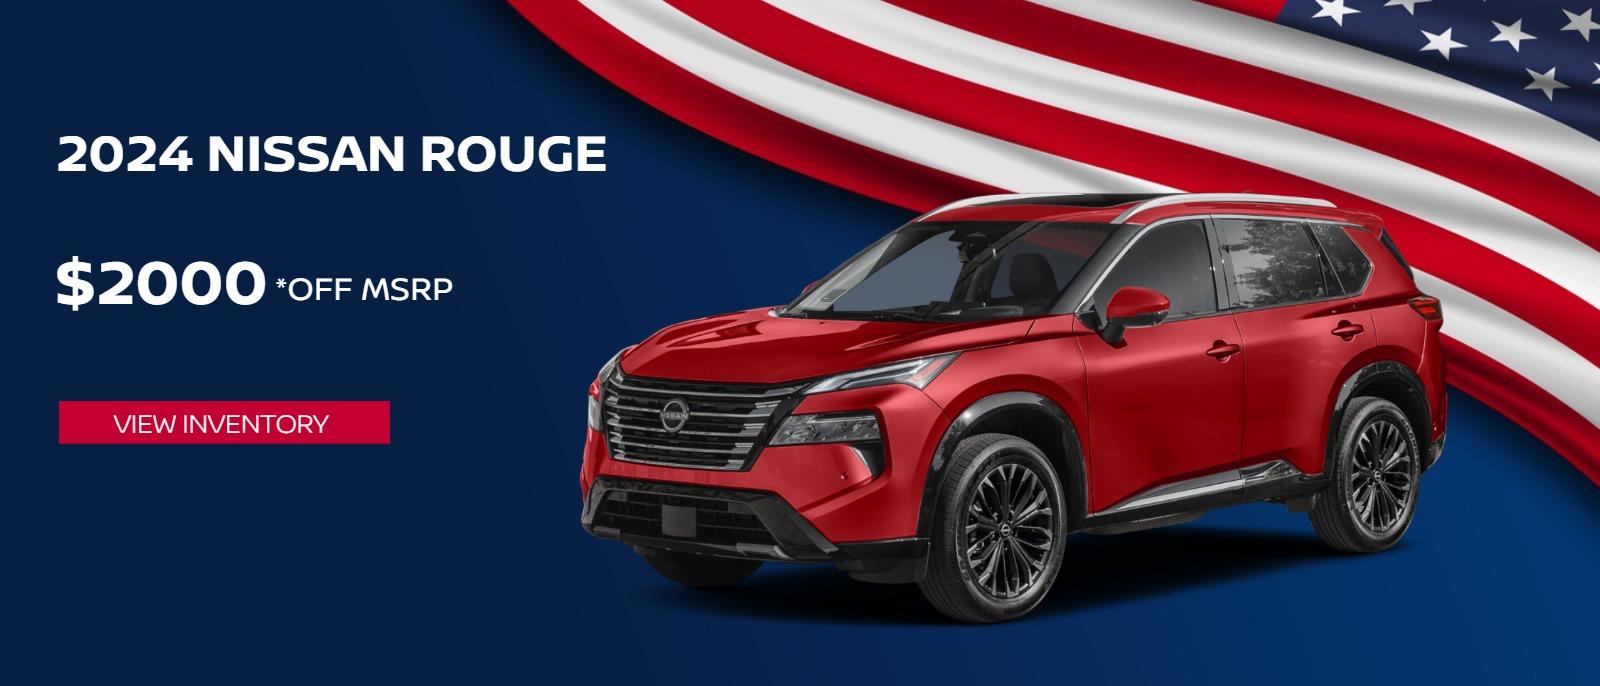 2024 Nissan Rouge | patriotic theme